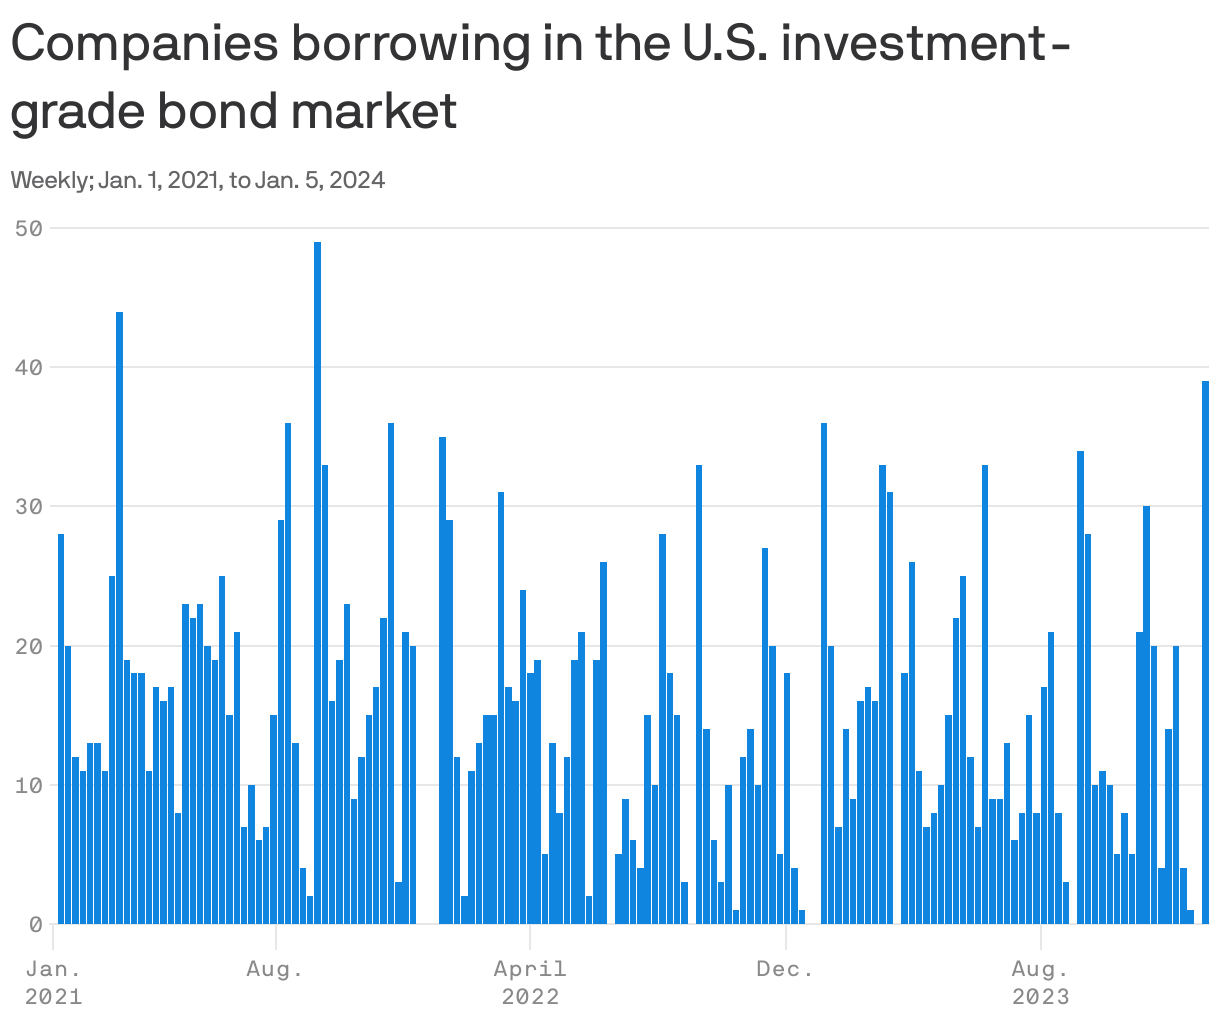 Companies borrowing in the U.S. investment-grade bond market